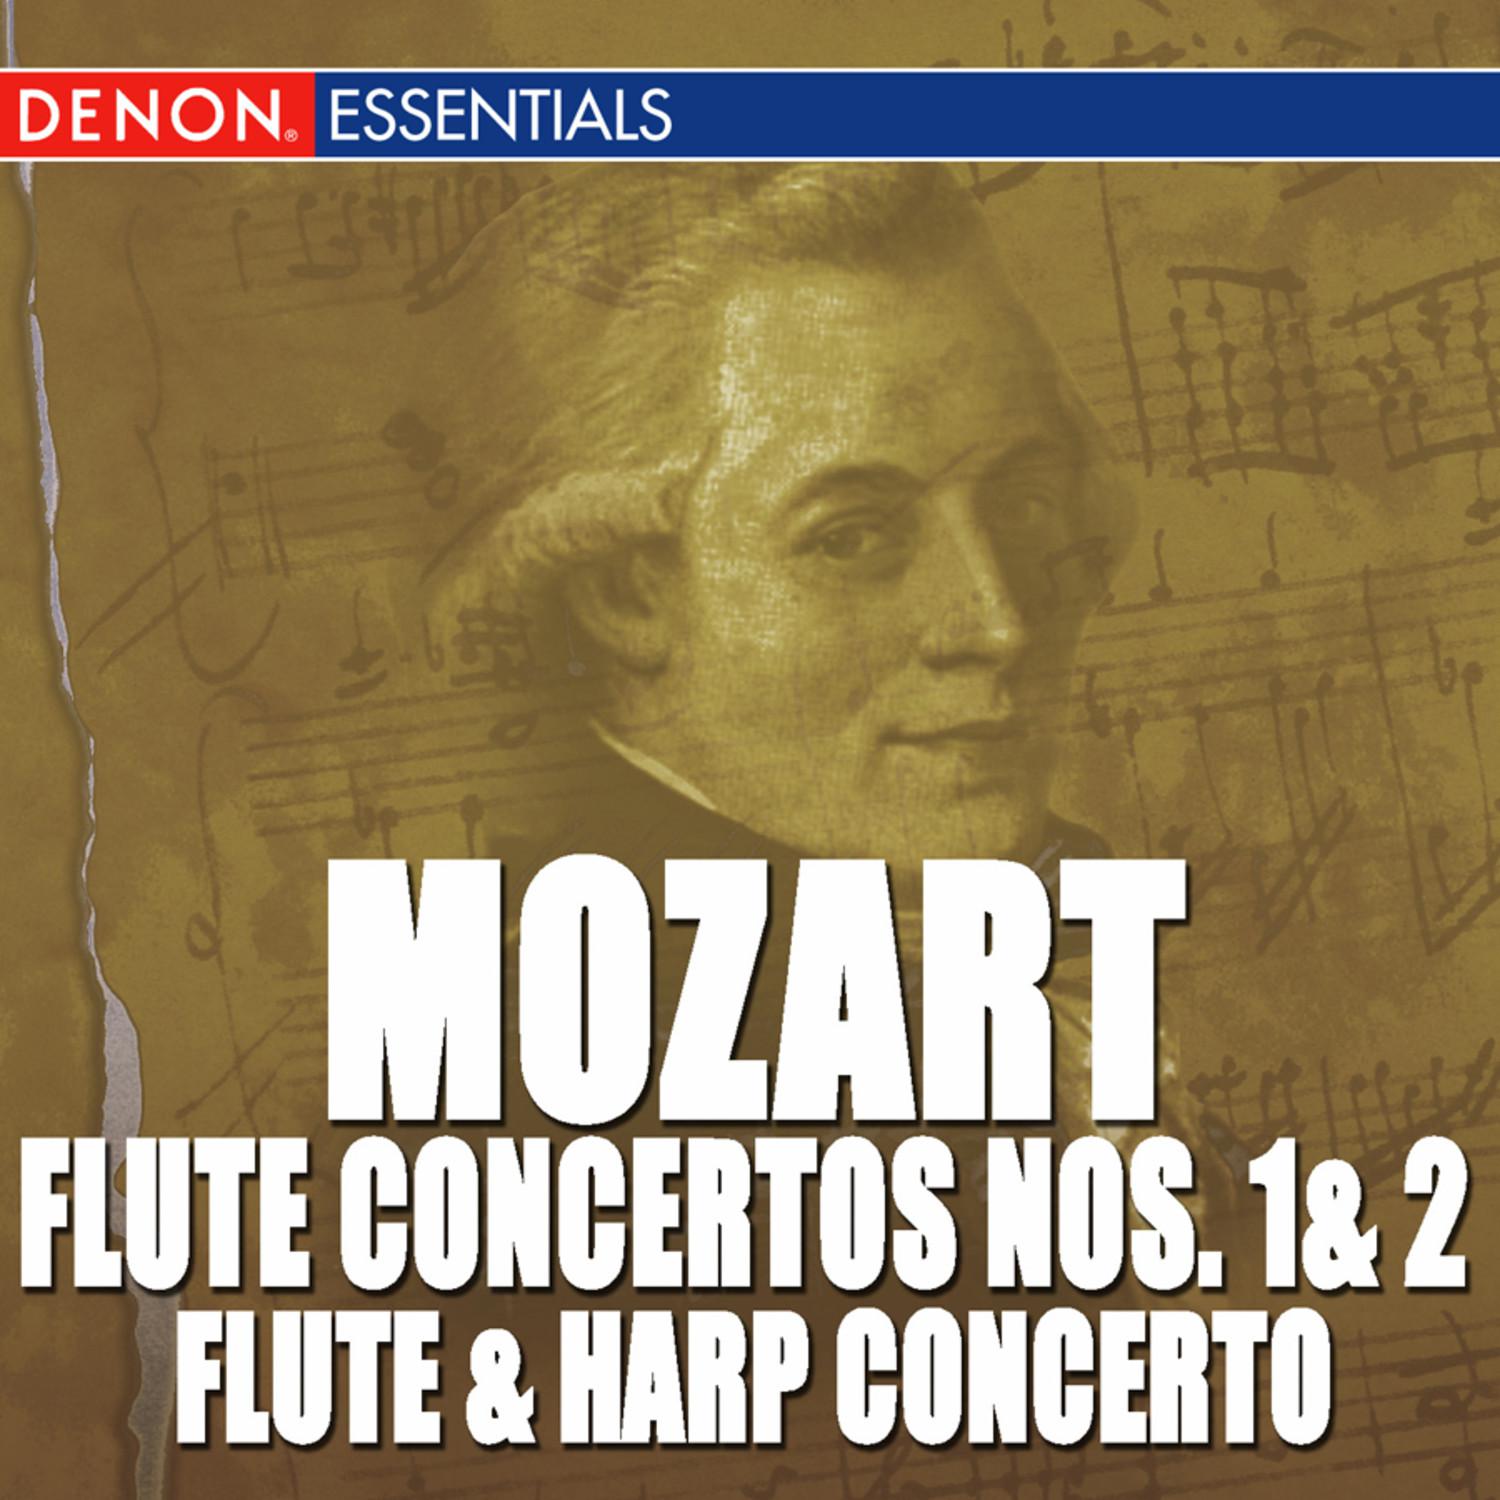 Flute Concerto No. 2 in D Major, KV. 314: I. Allegro aperto